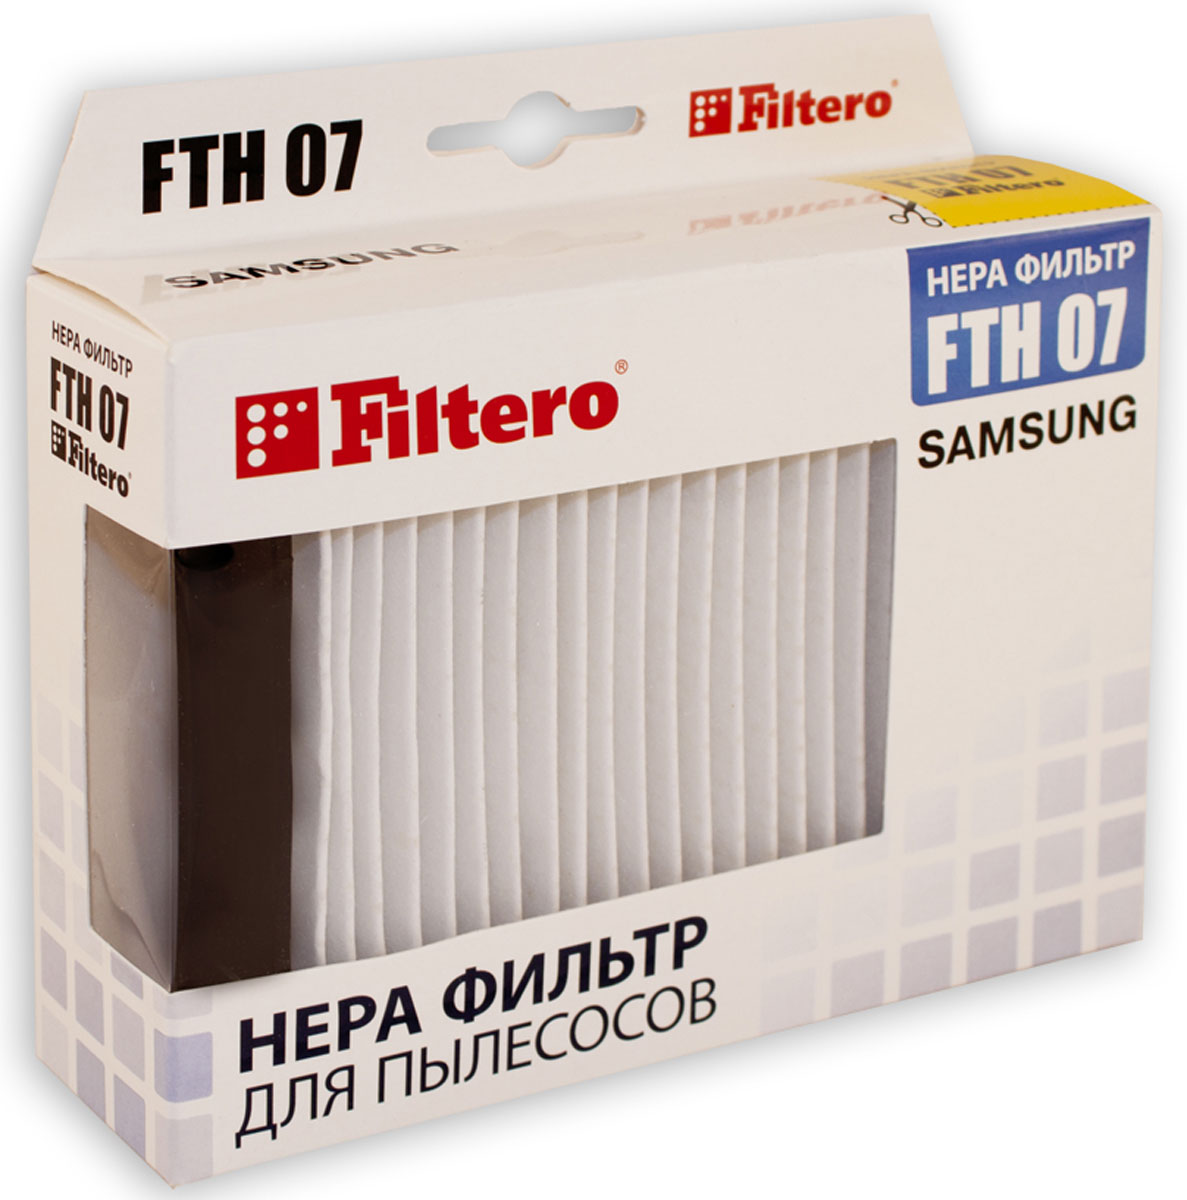 Filtero FTH 07 SAM HEPA-   Samsung